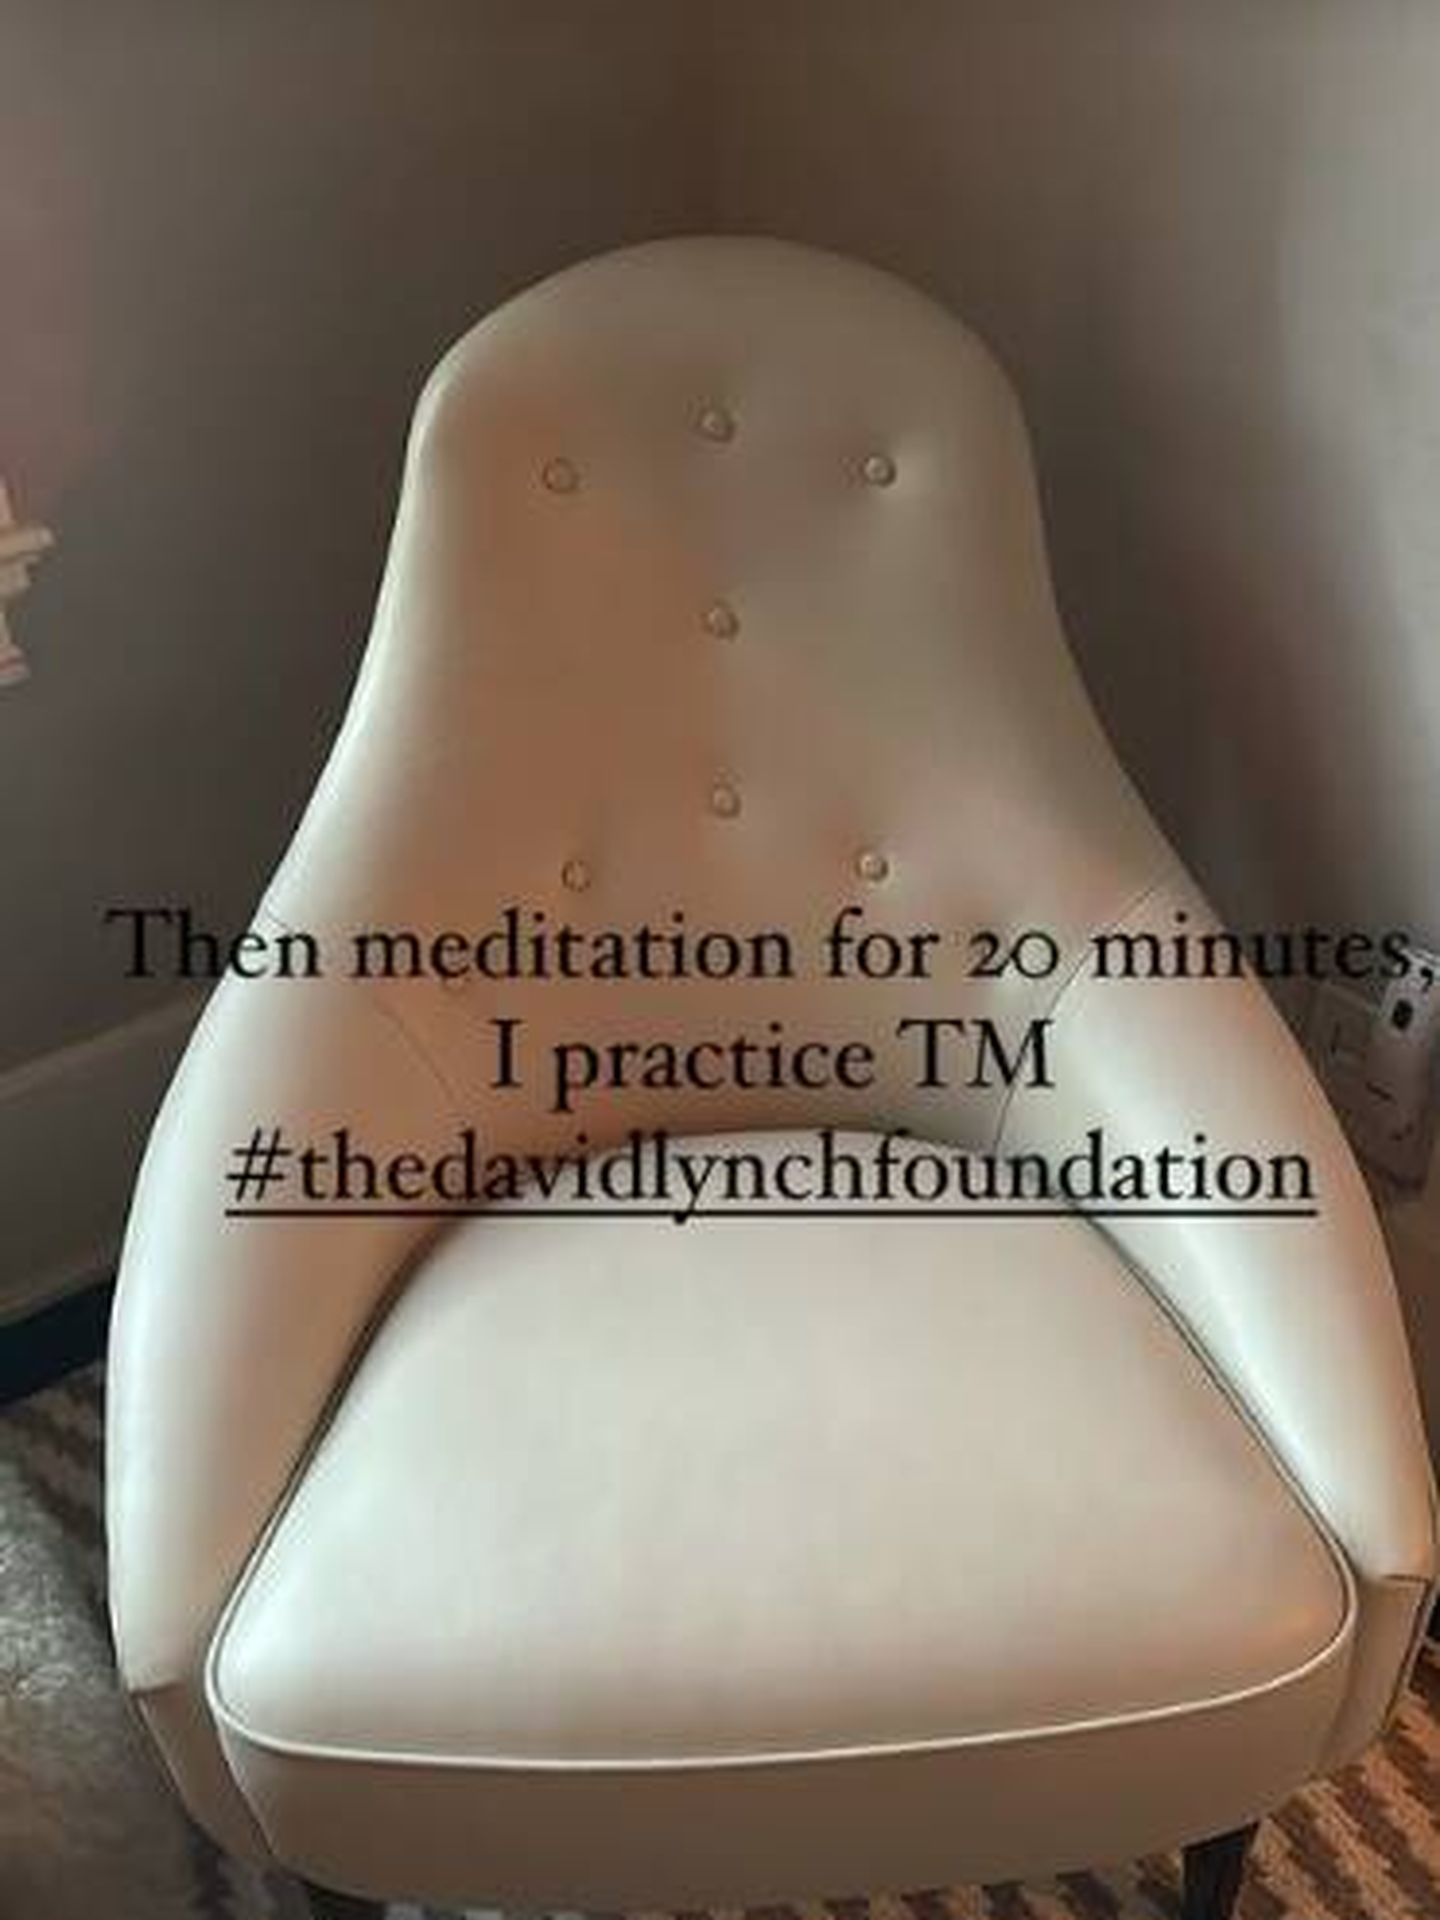 Esta es su silla de meditar. (Instagram/@gwynethpaltrow)